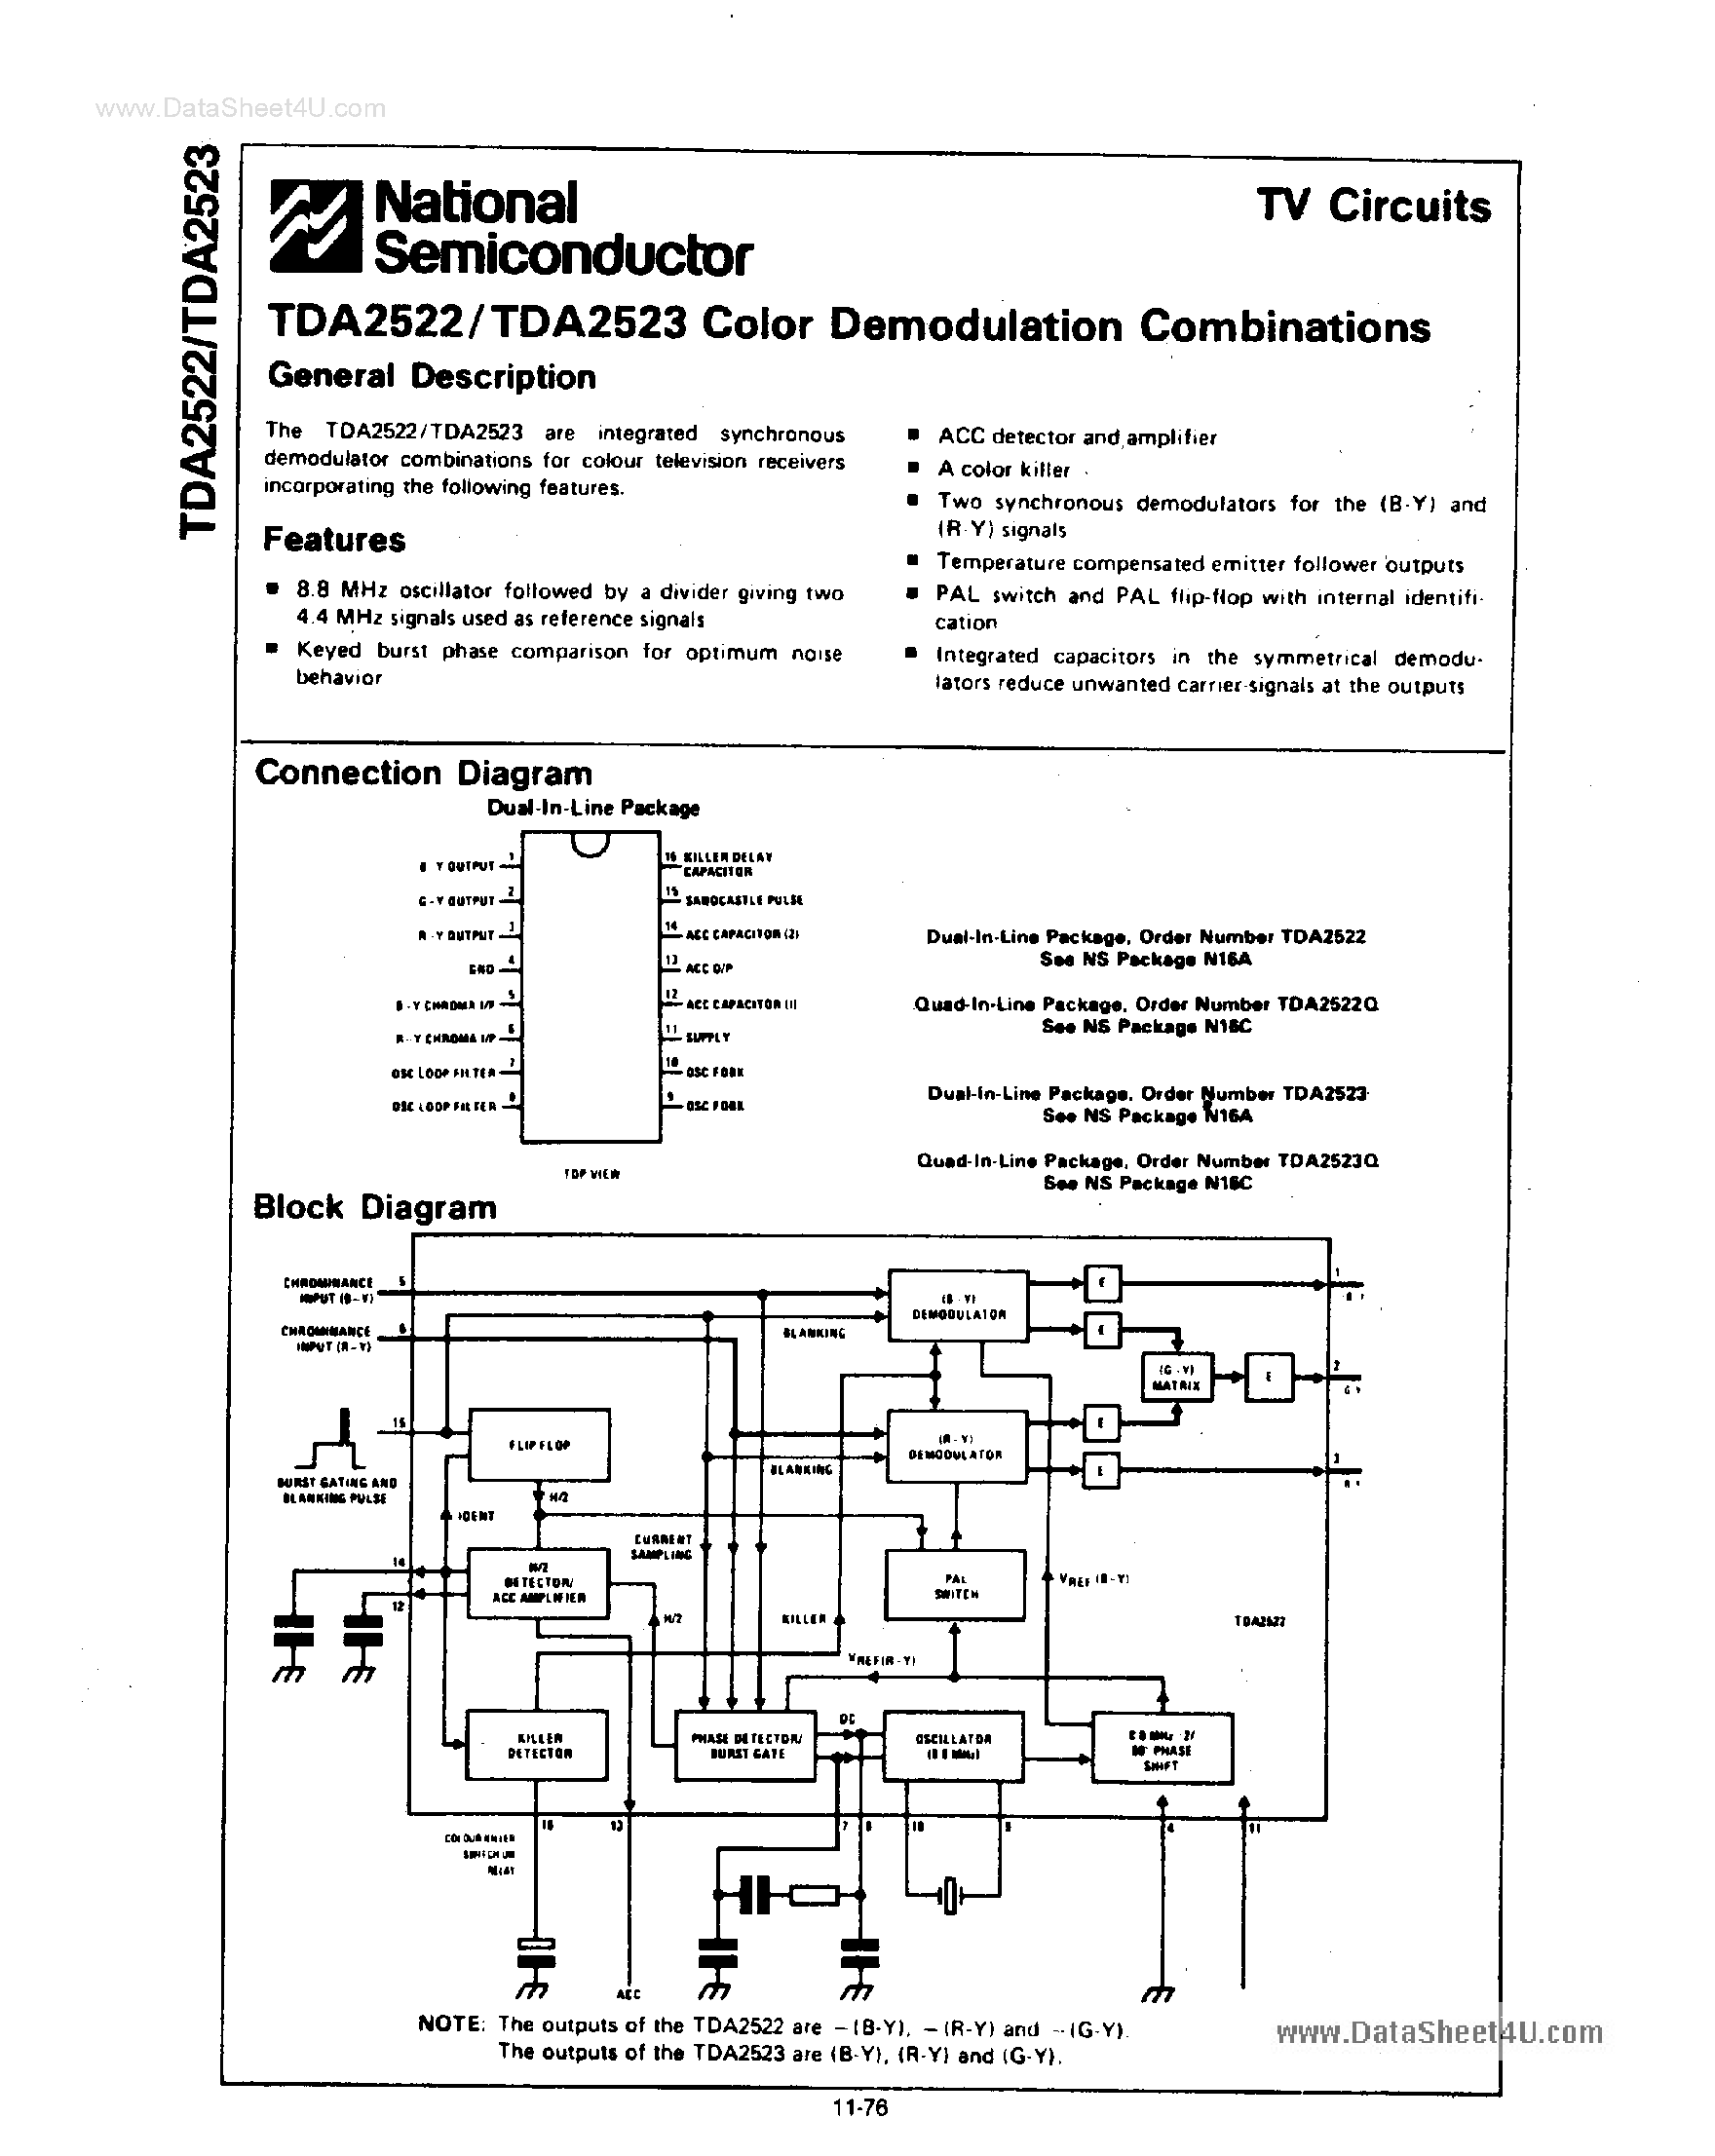 Datasheet TDA2522 - (TDA2522 / TDA2523) COLOR DEMODULATION COMBINATIONS page 1